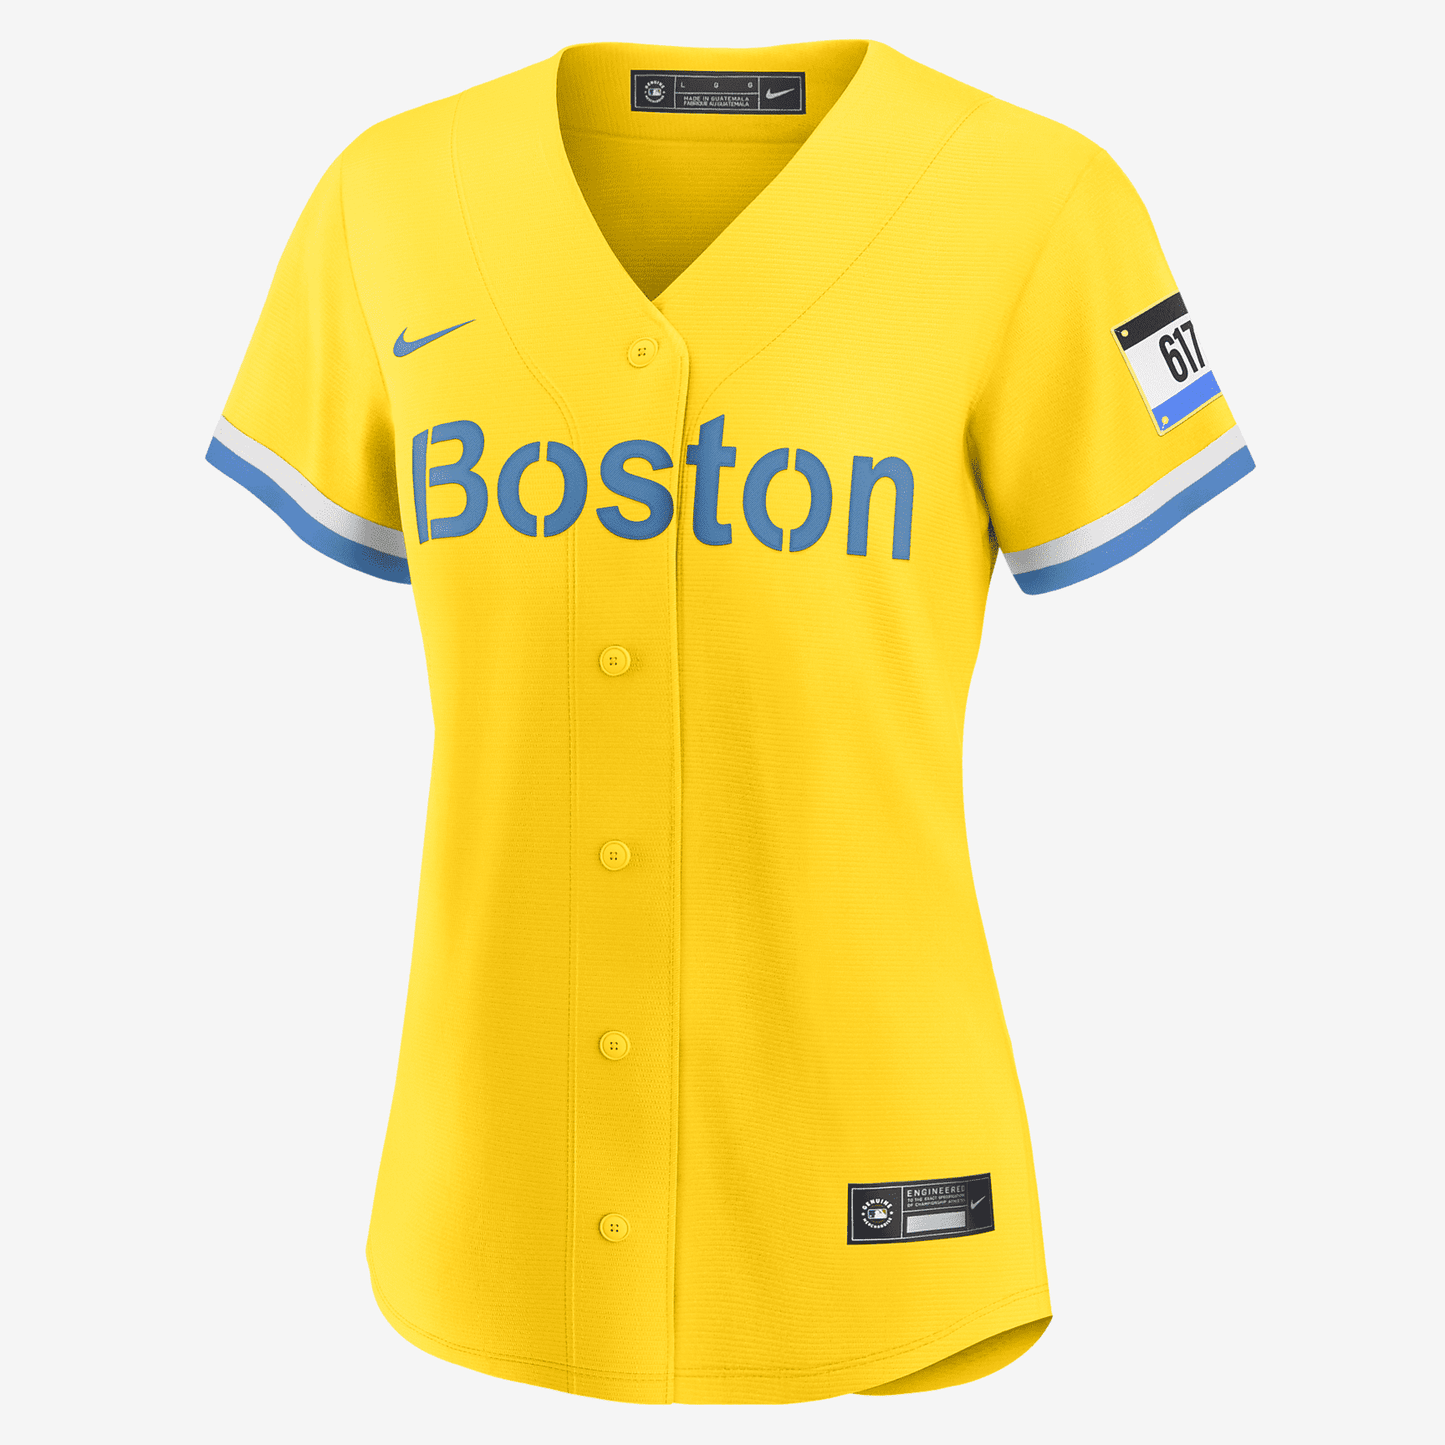 MLB Boston Red Sox City Connect (Rafael Devers) Women's Replica Baseball Jersey - Gold/Light Blue